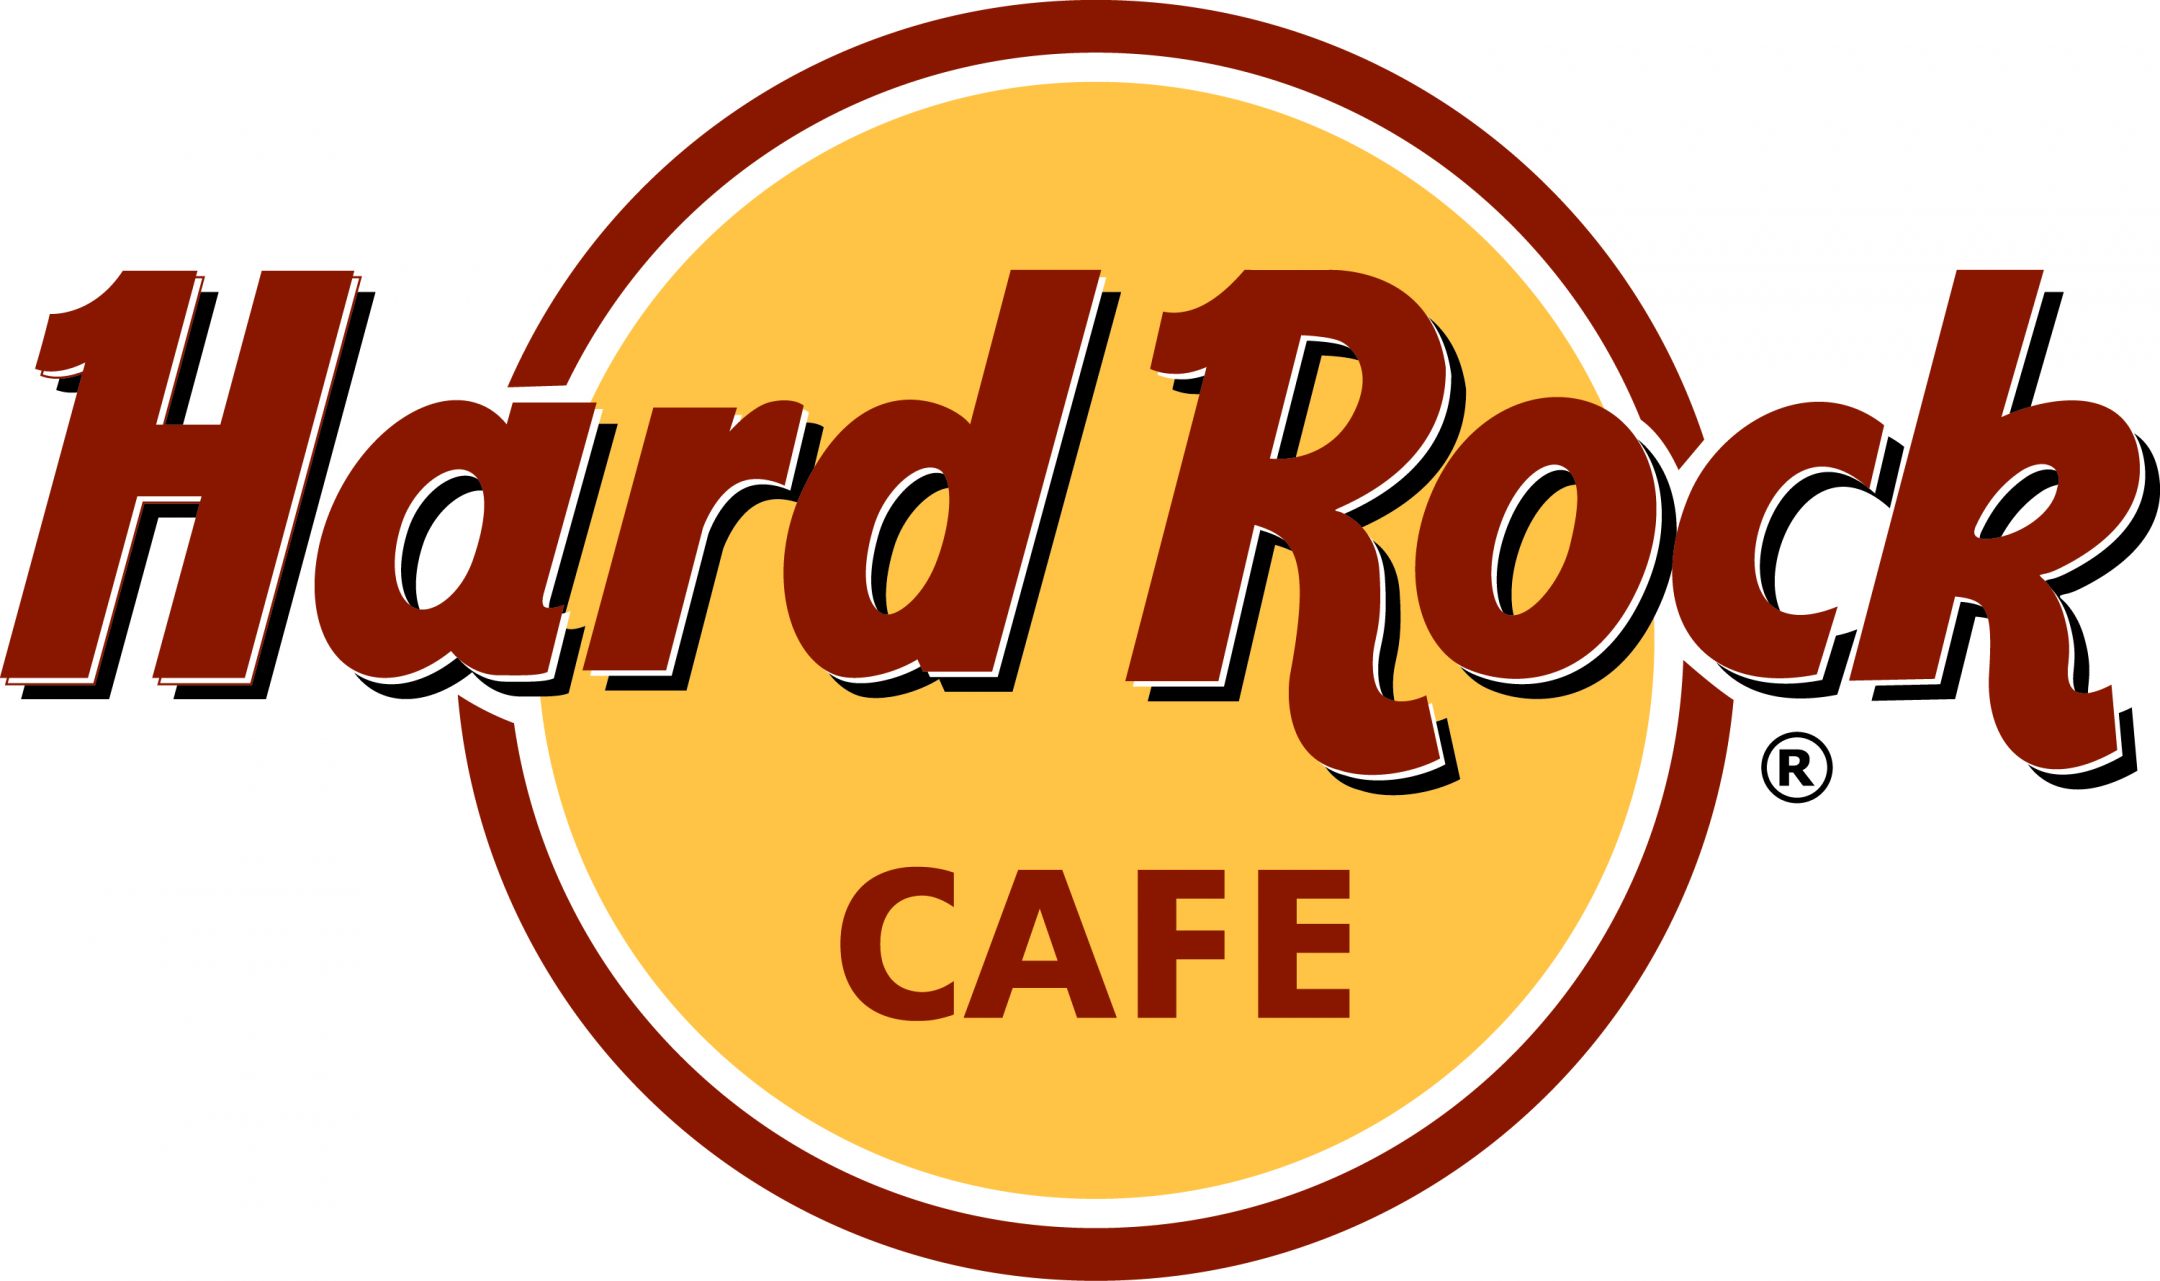 Hard Rock Cafe Memorabilia Collection